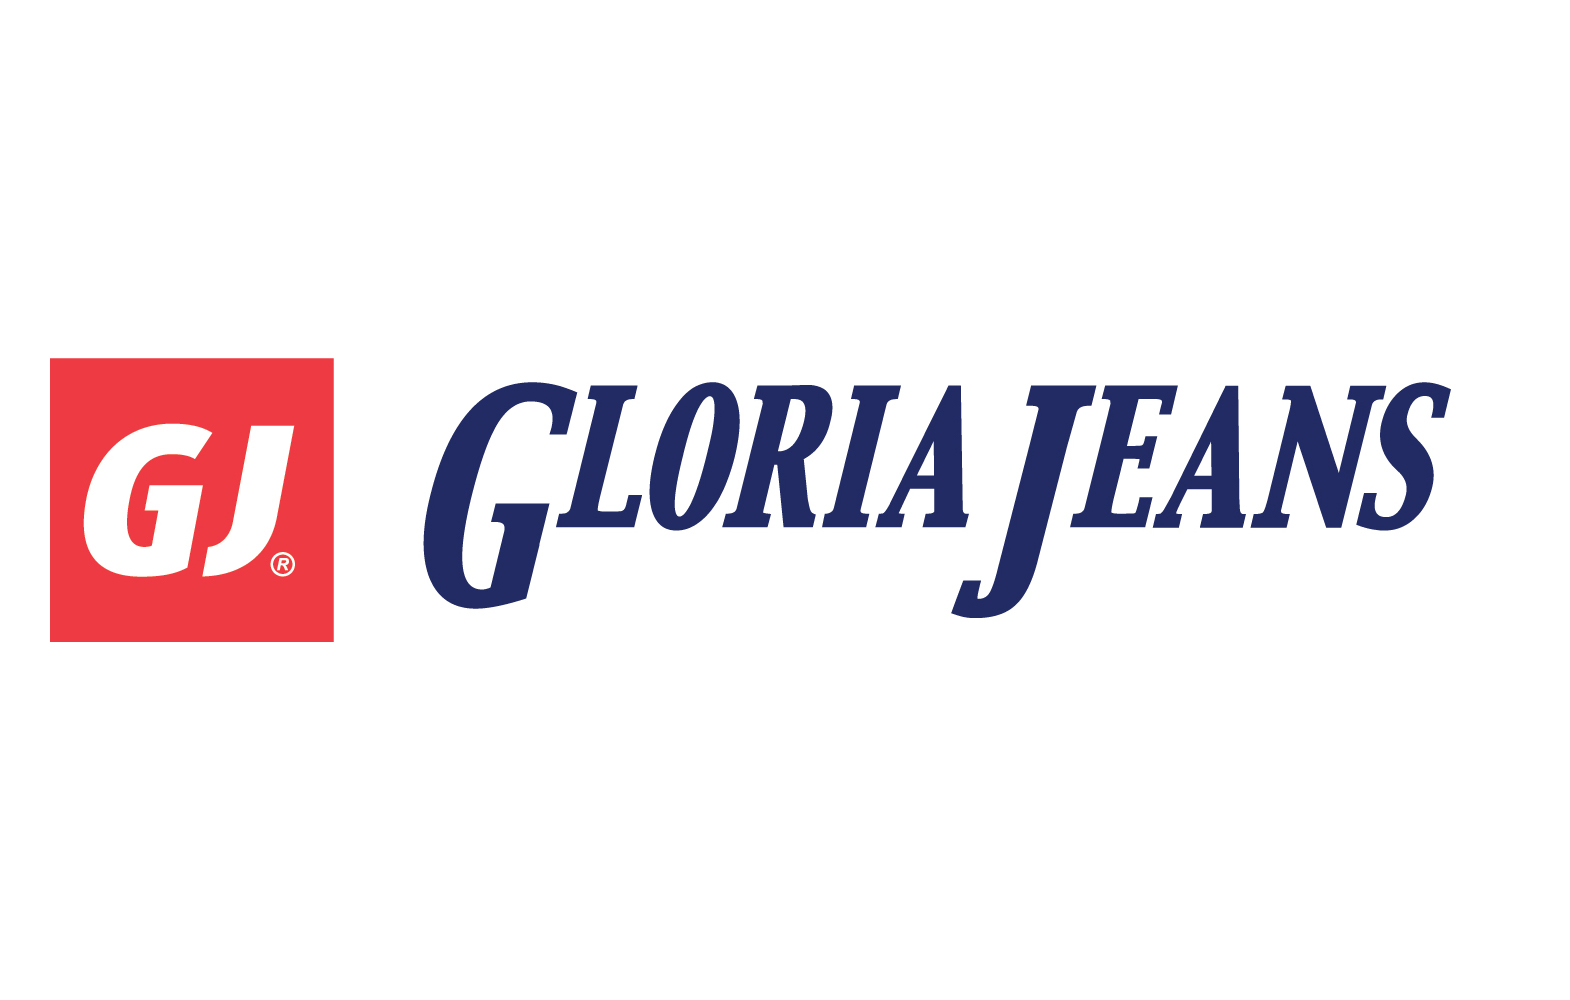  . - 50%!  24.03! Gloria Jeans!  ! ,  , , , !   07/22